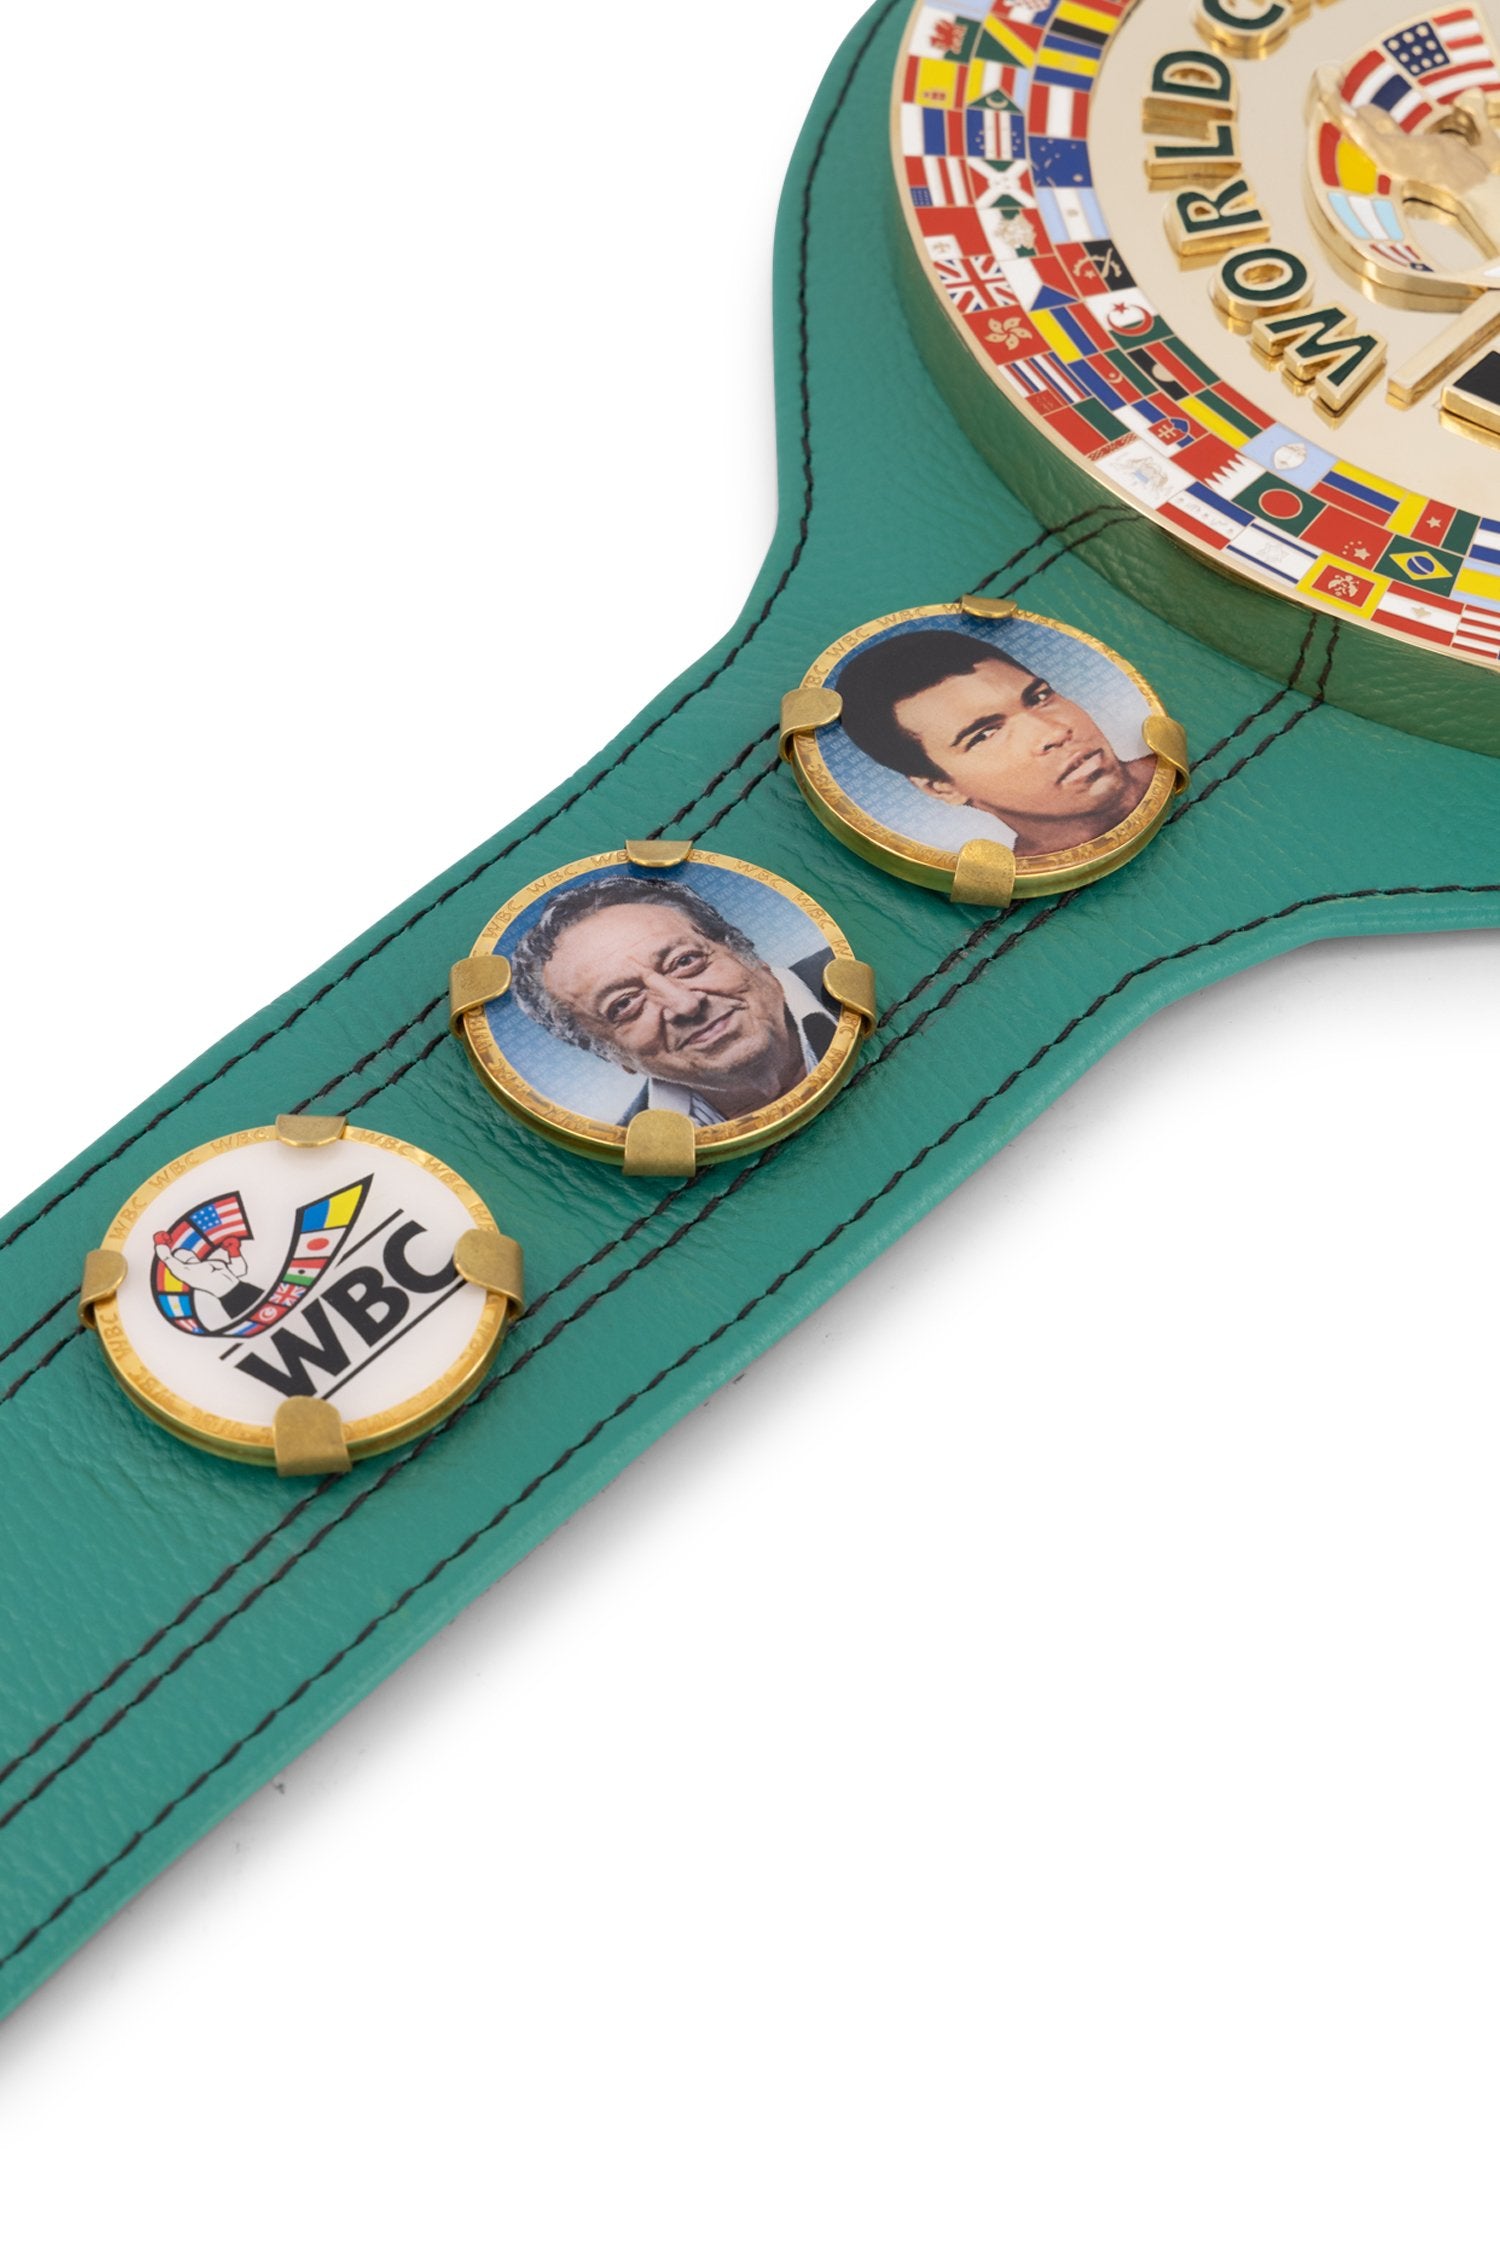 WBC Replica Belts WBC Championship Replica Belt